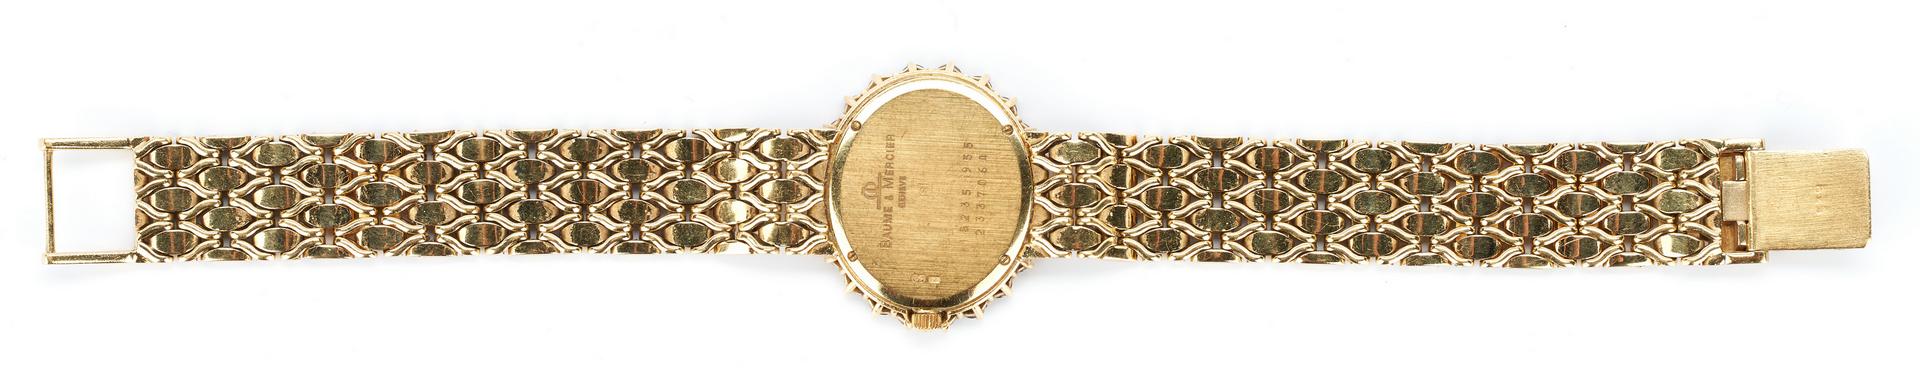 18K Baume & Mercier watch with Diamond Surround - Image 7 of 13